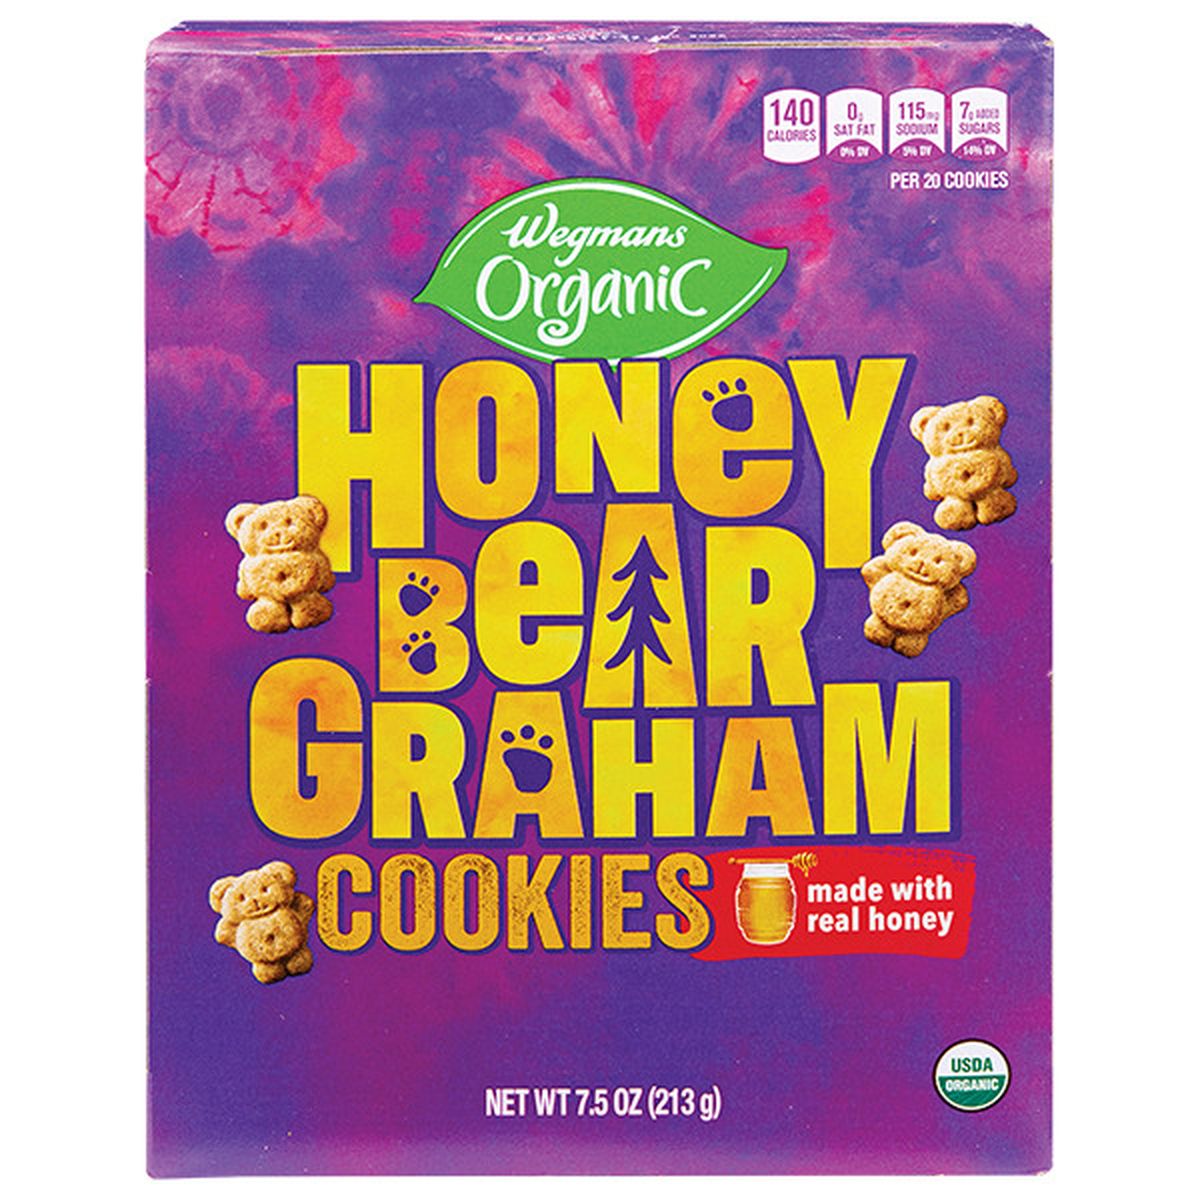 Calories in Wegmans Organic Honey Bear Graham Cookies